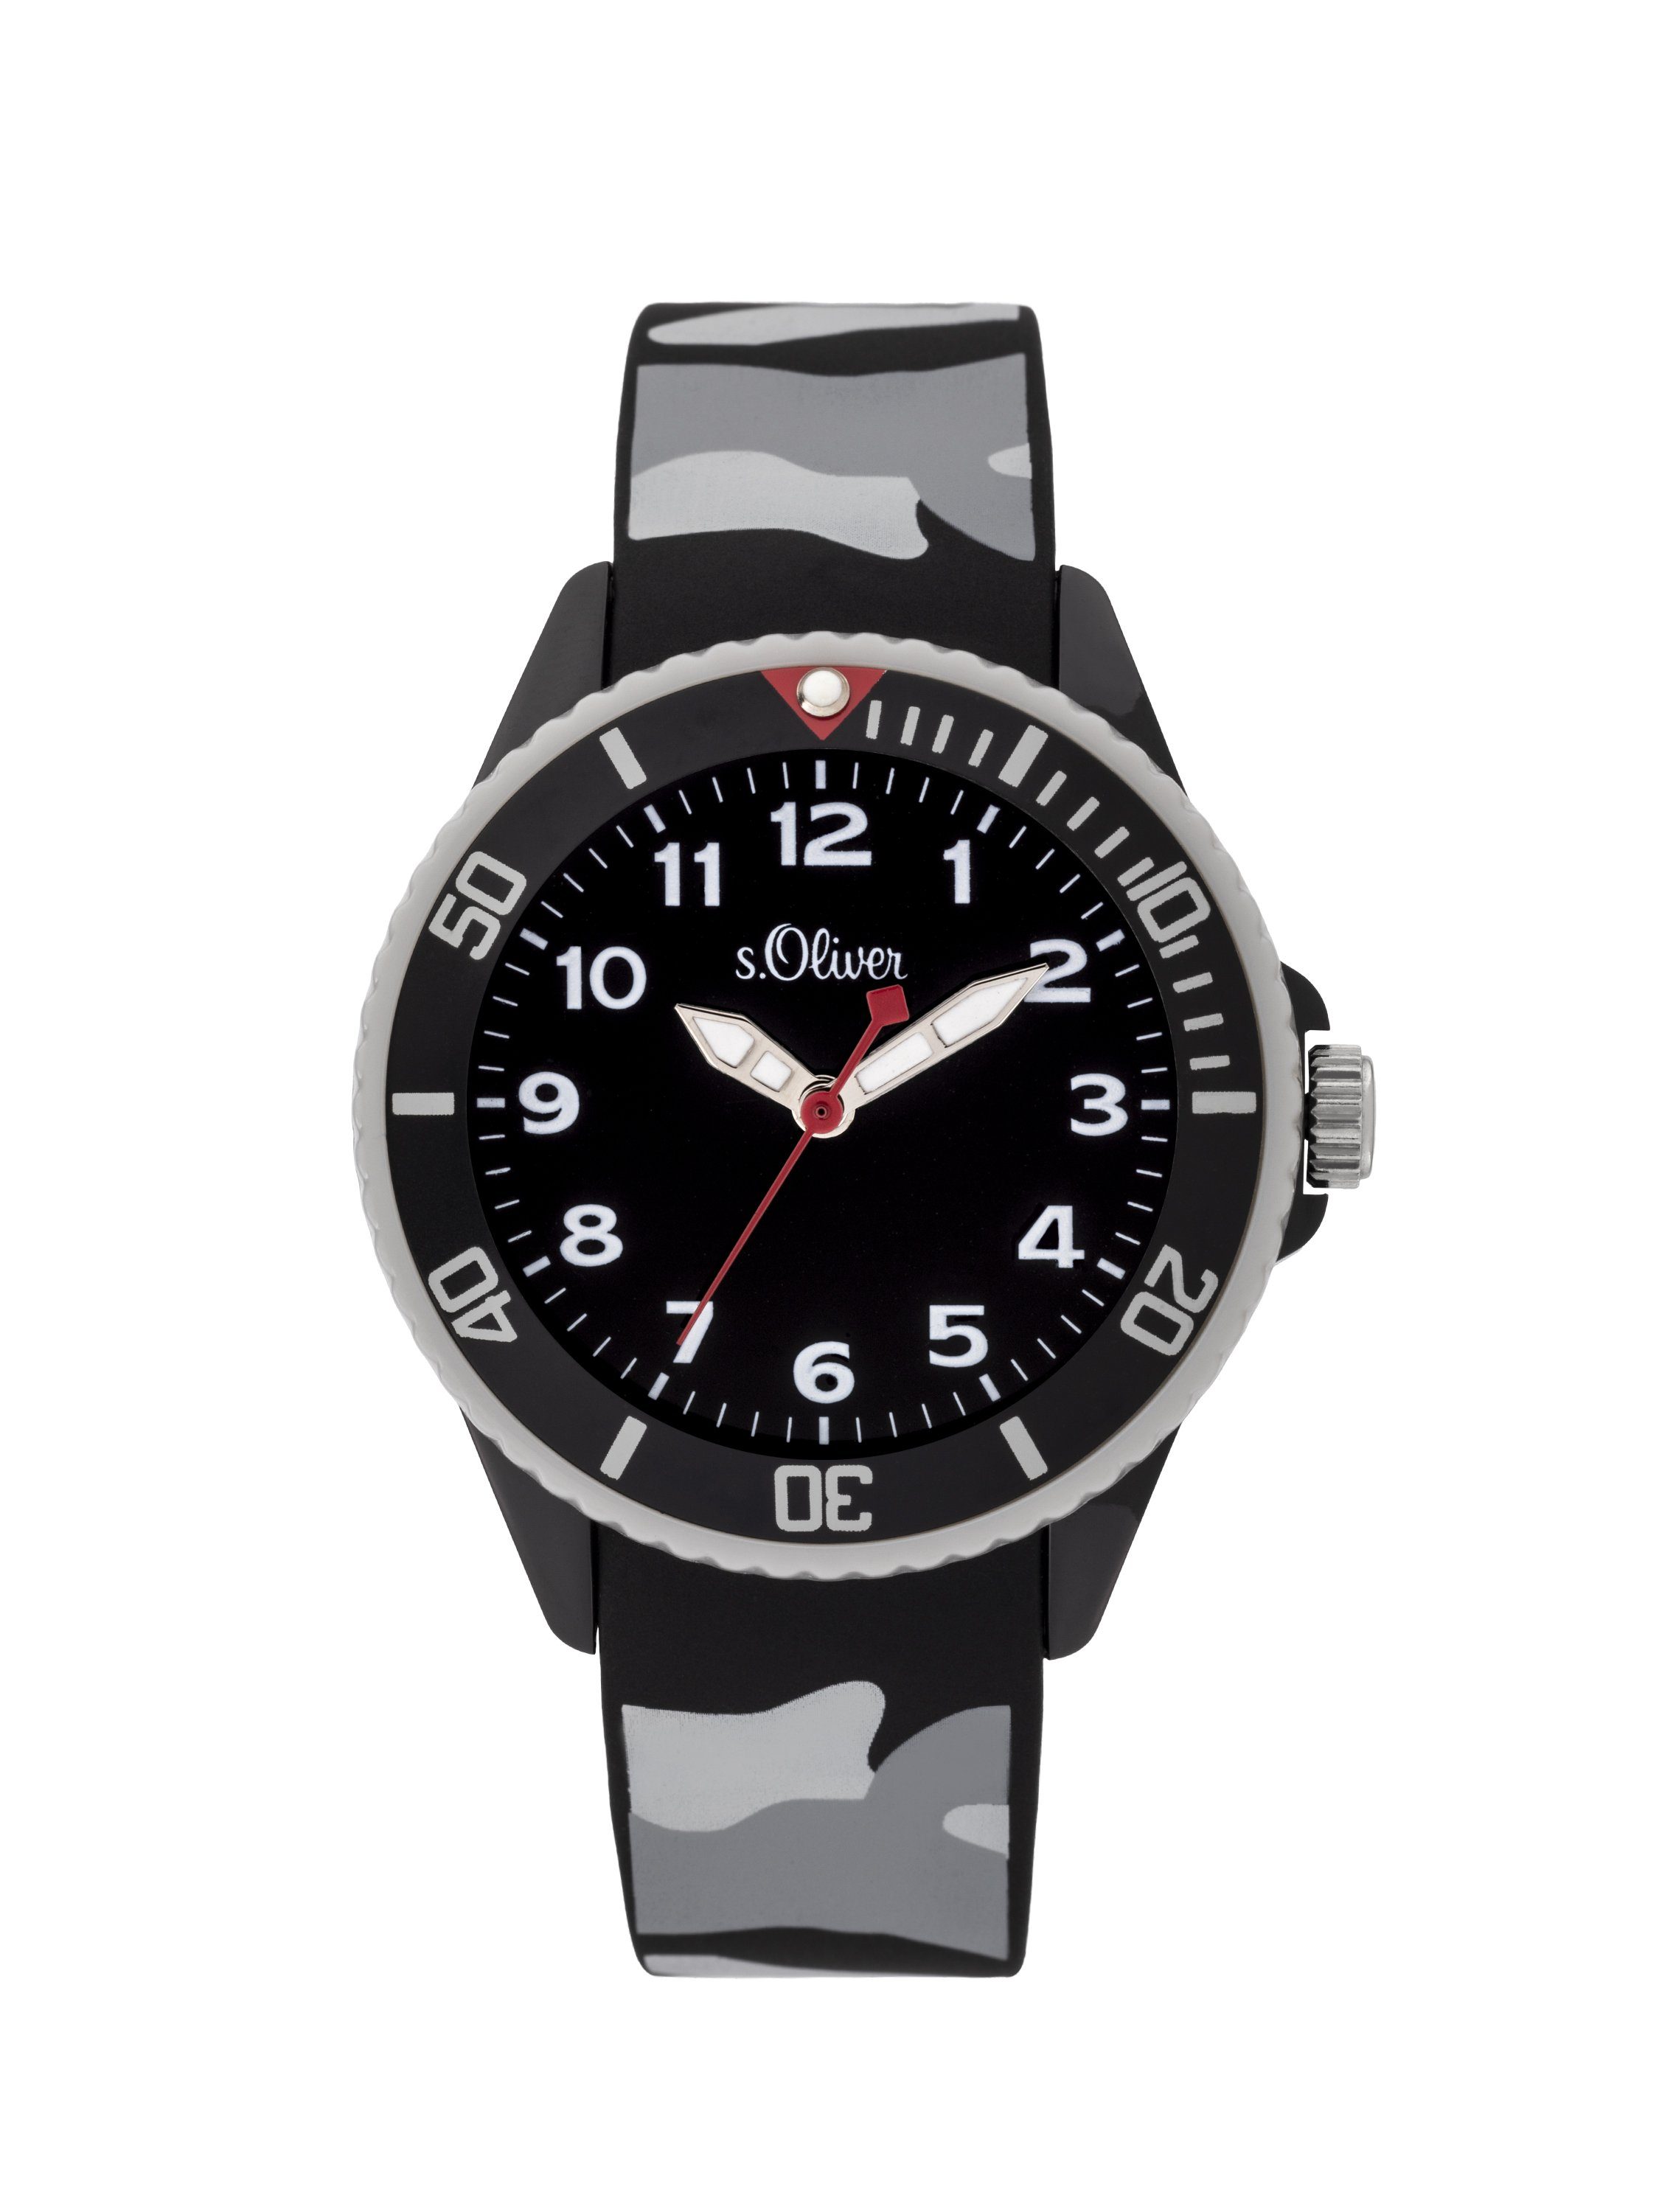 s.Oliver Quarzuhr »Armbanduhr« online kaufen | OTTO